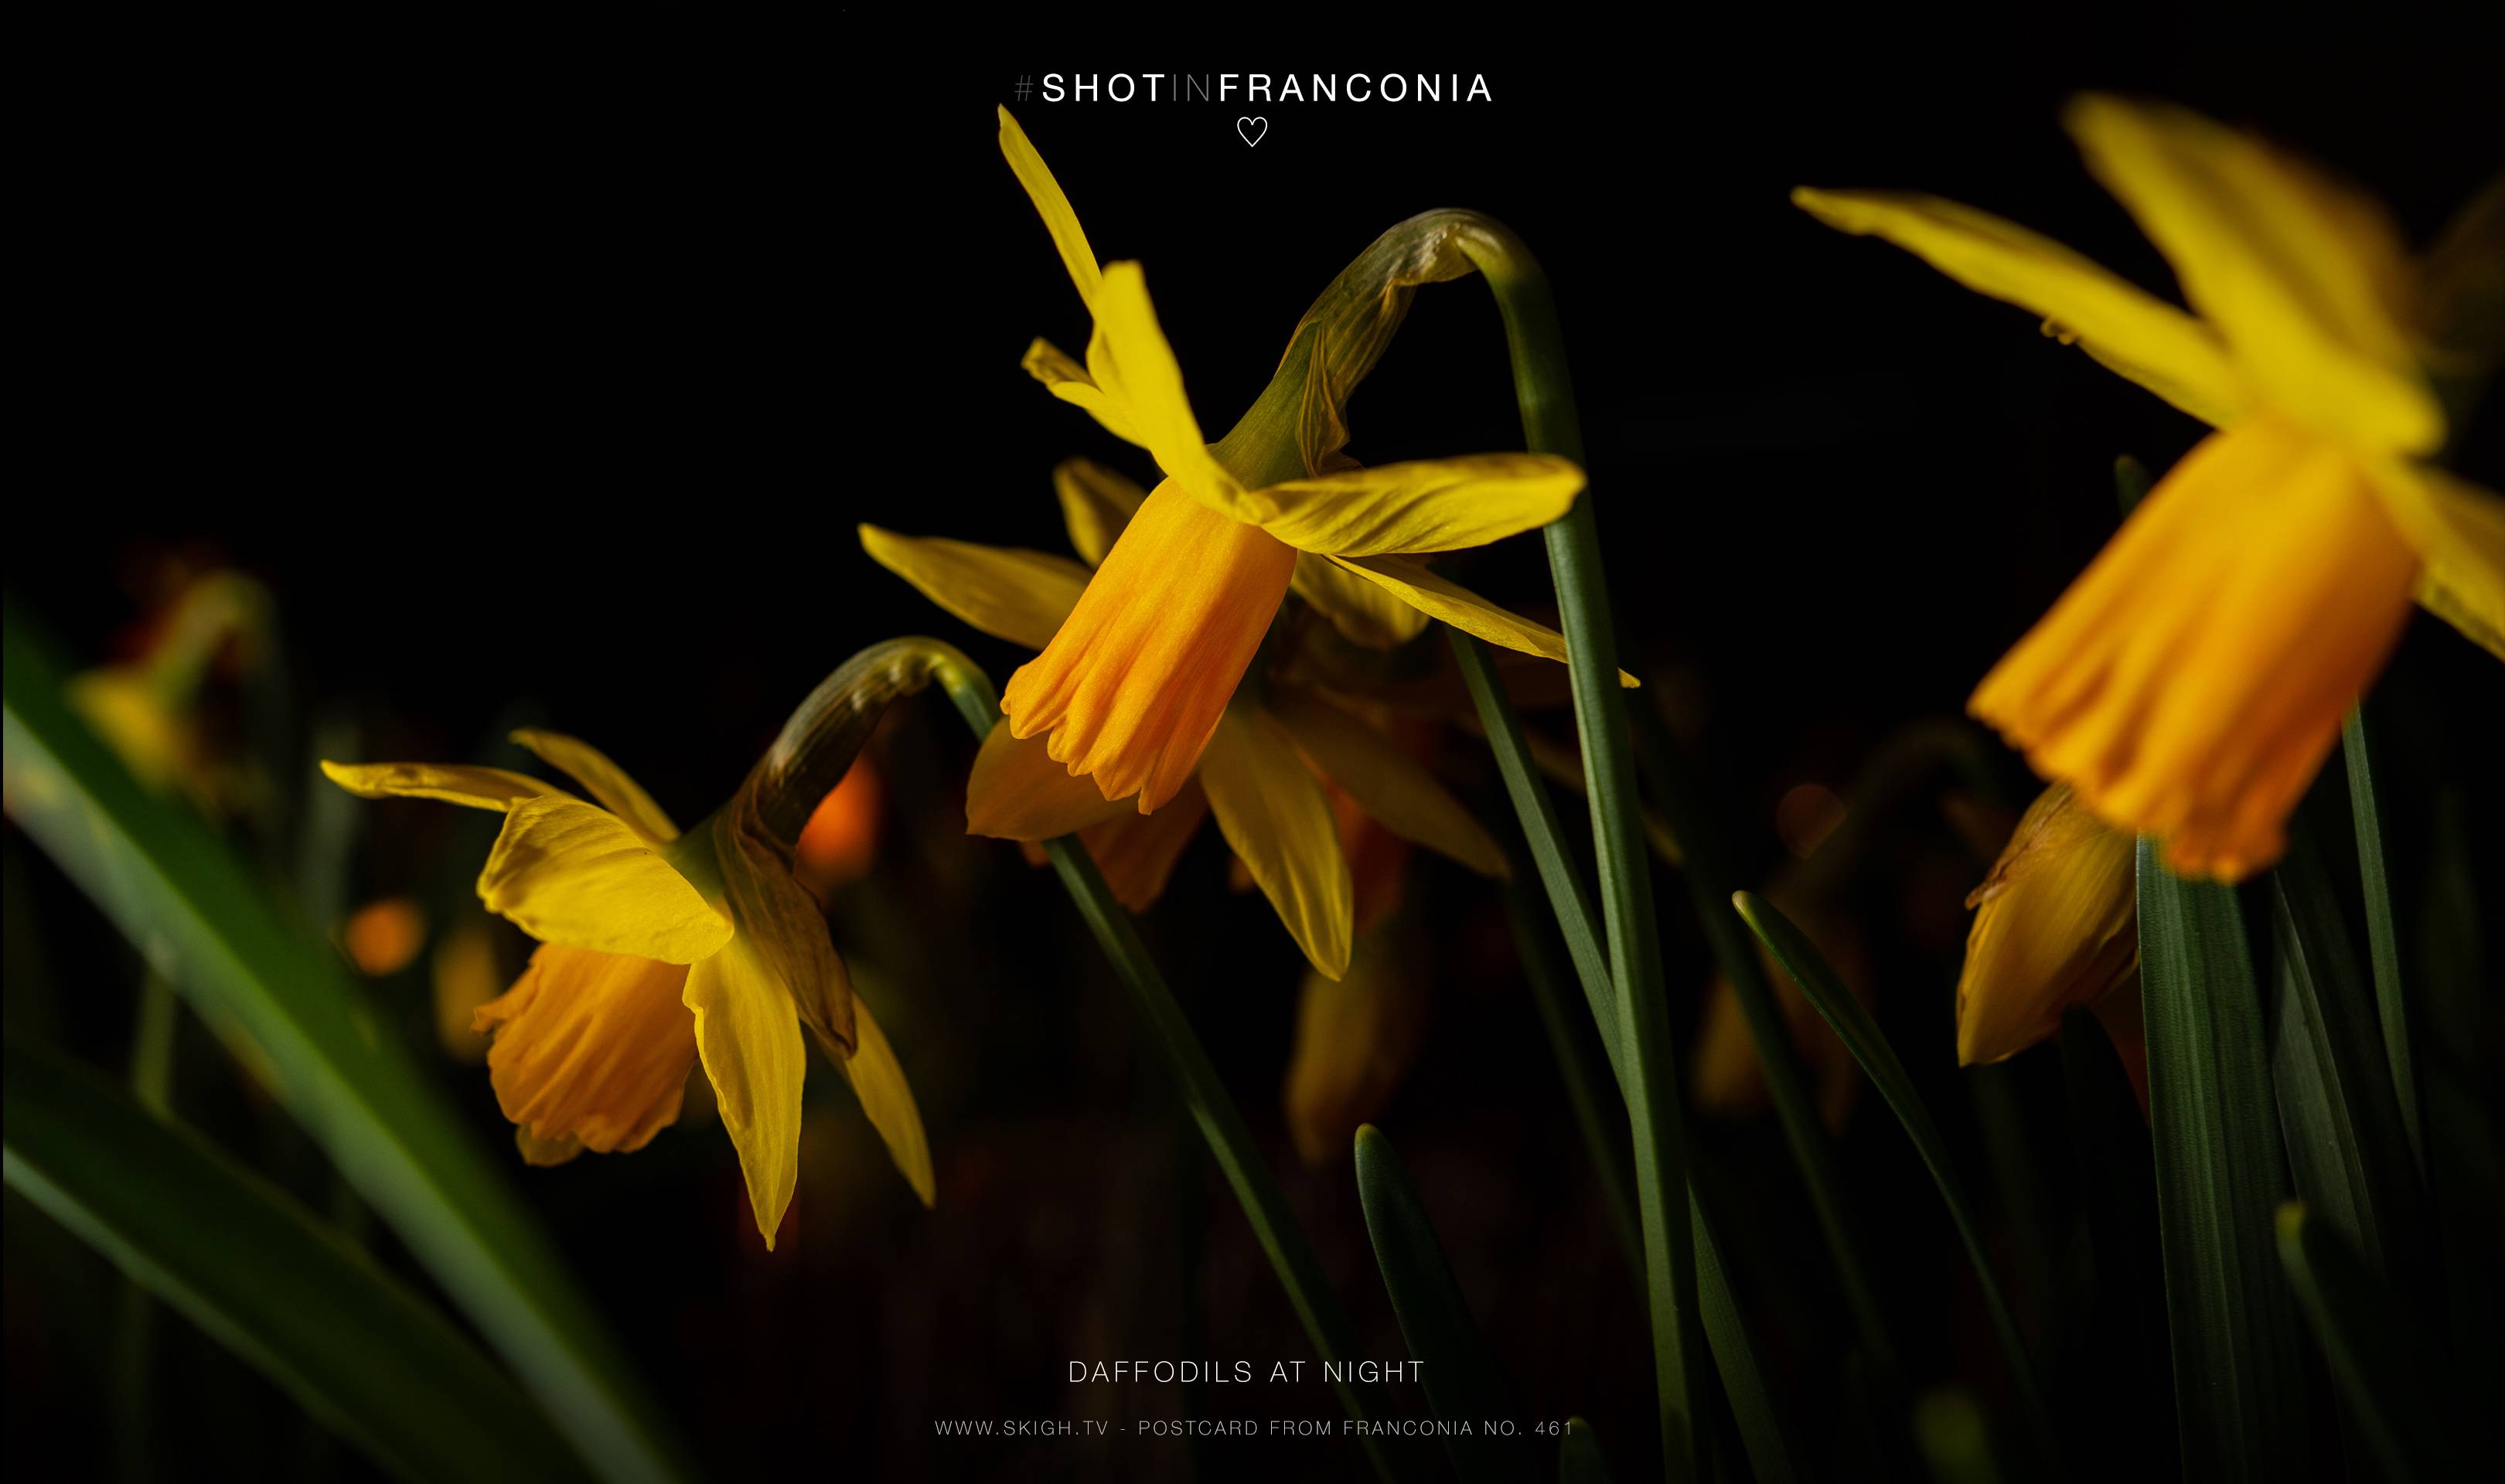 Daffodils at night